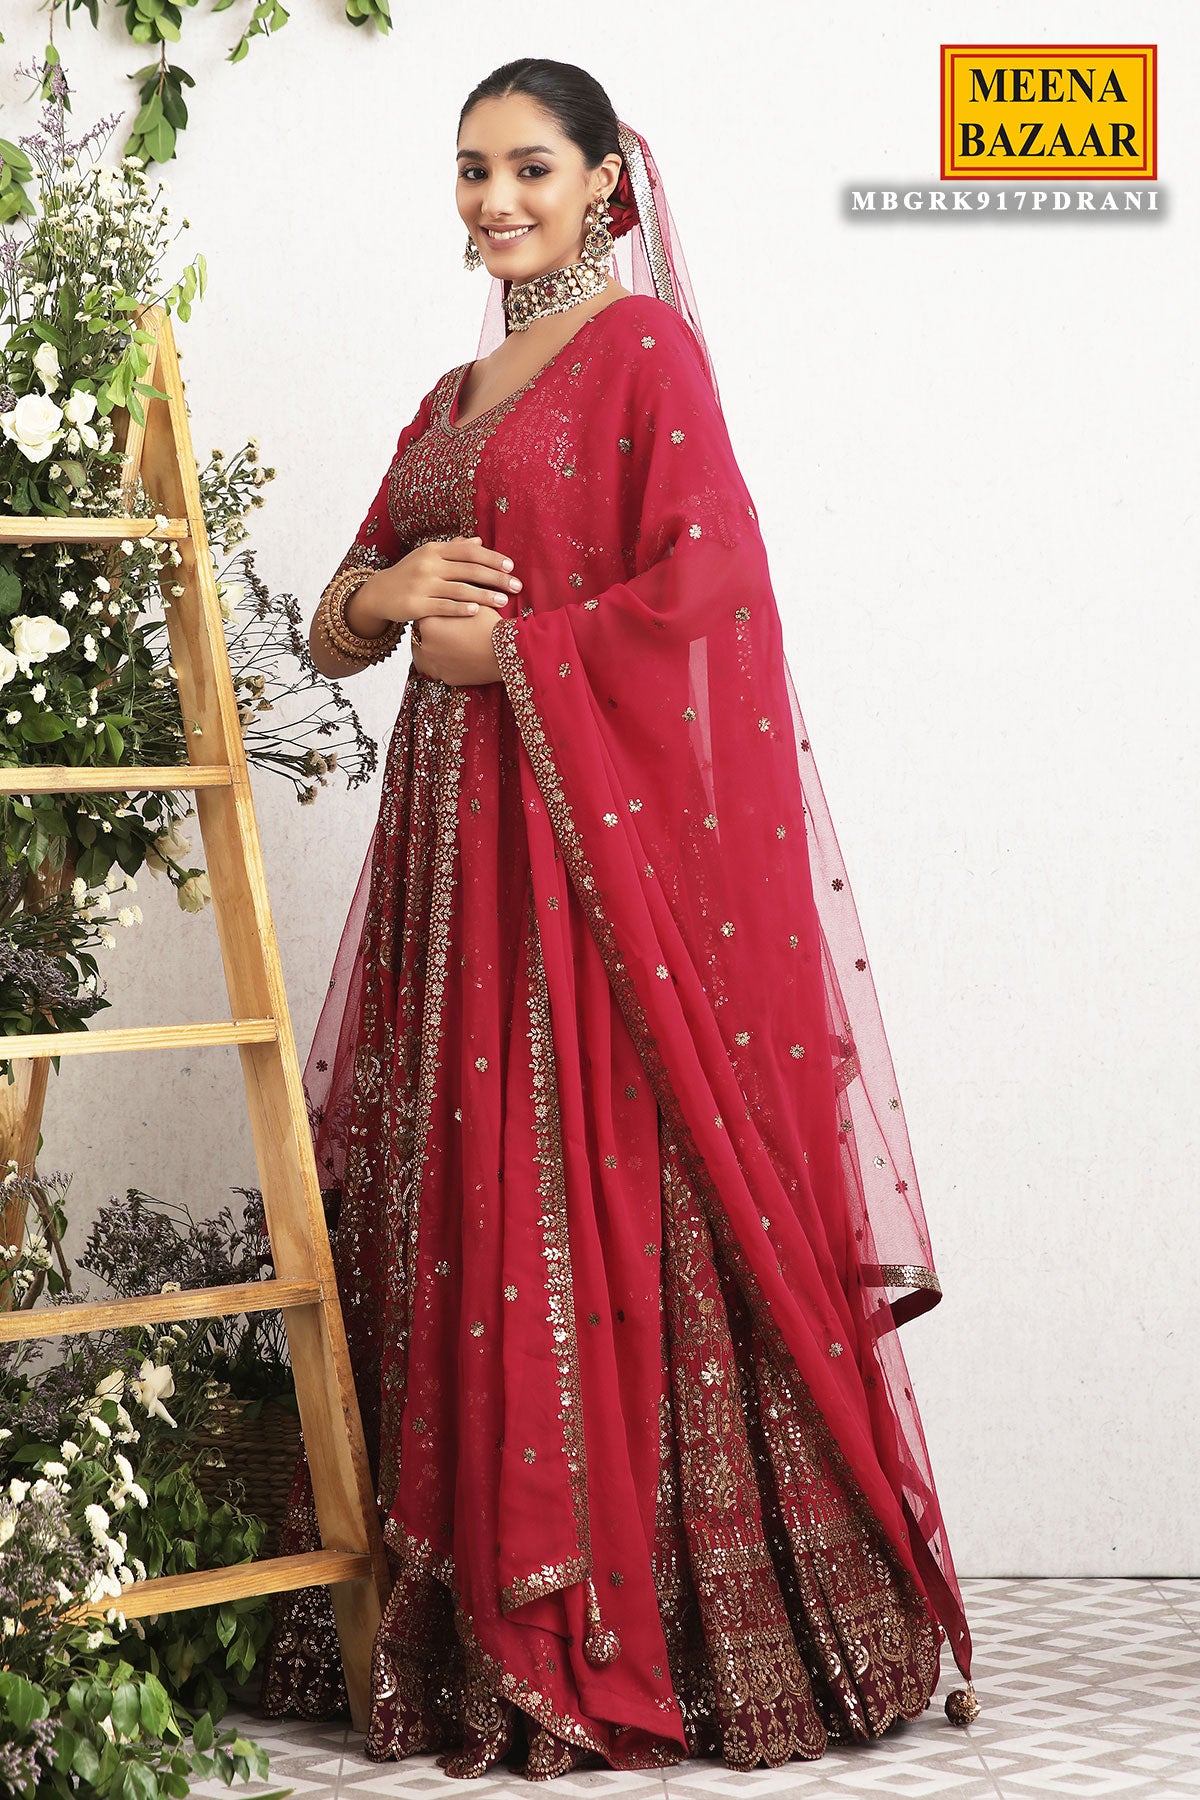 Meena Bazaar - A breathtaking Red Lehenga decorated with... | Facebook